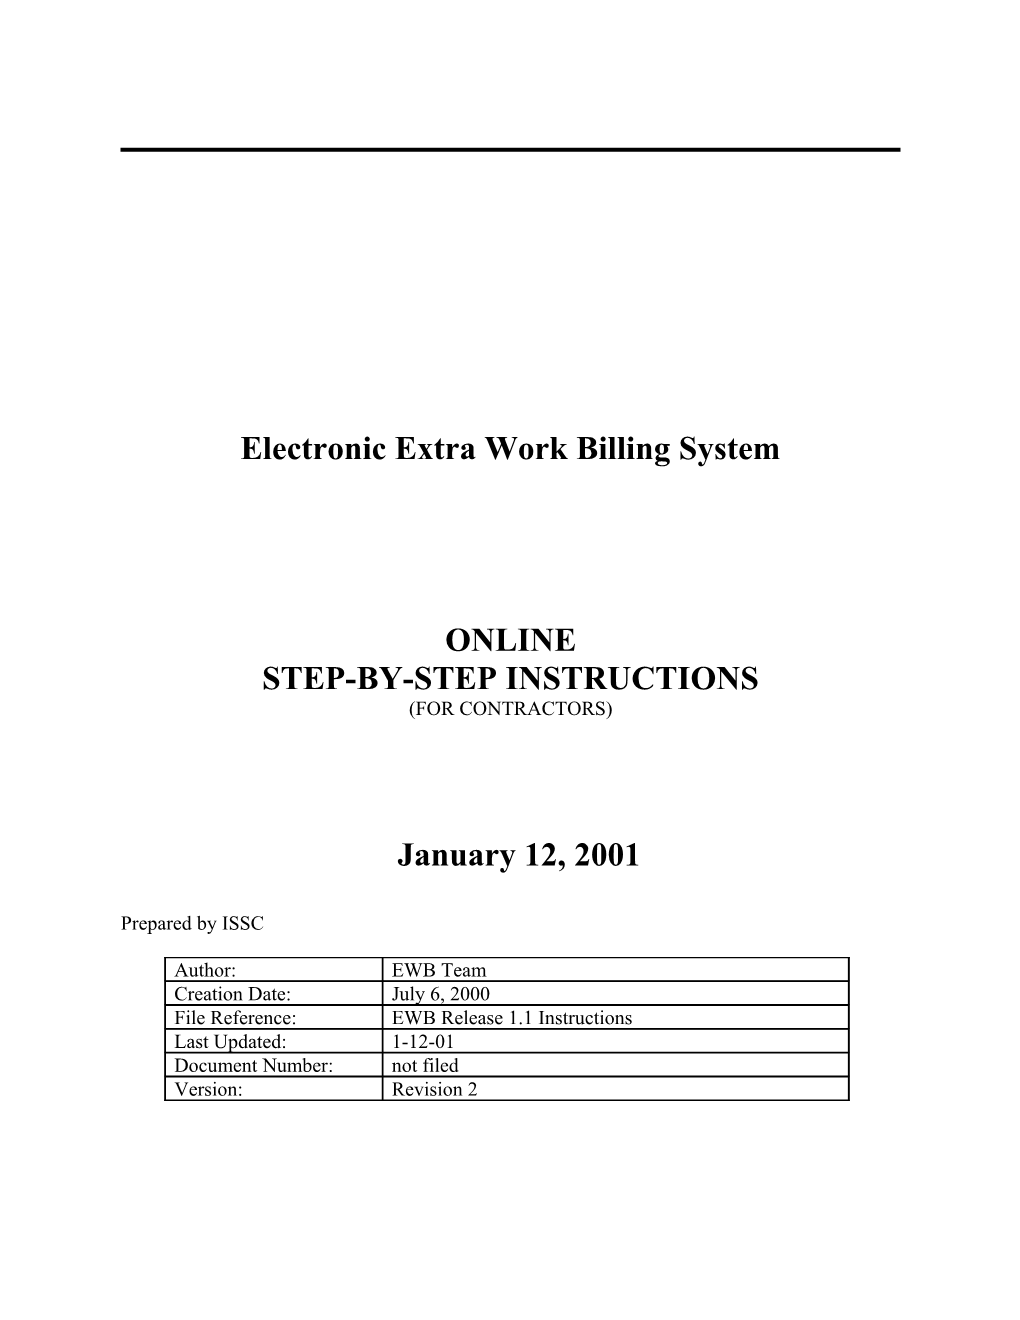 Extra Work Billing (EWB) Phase 1